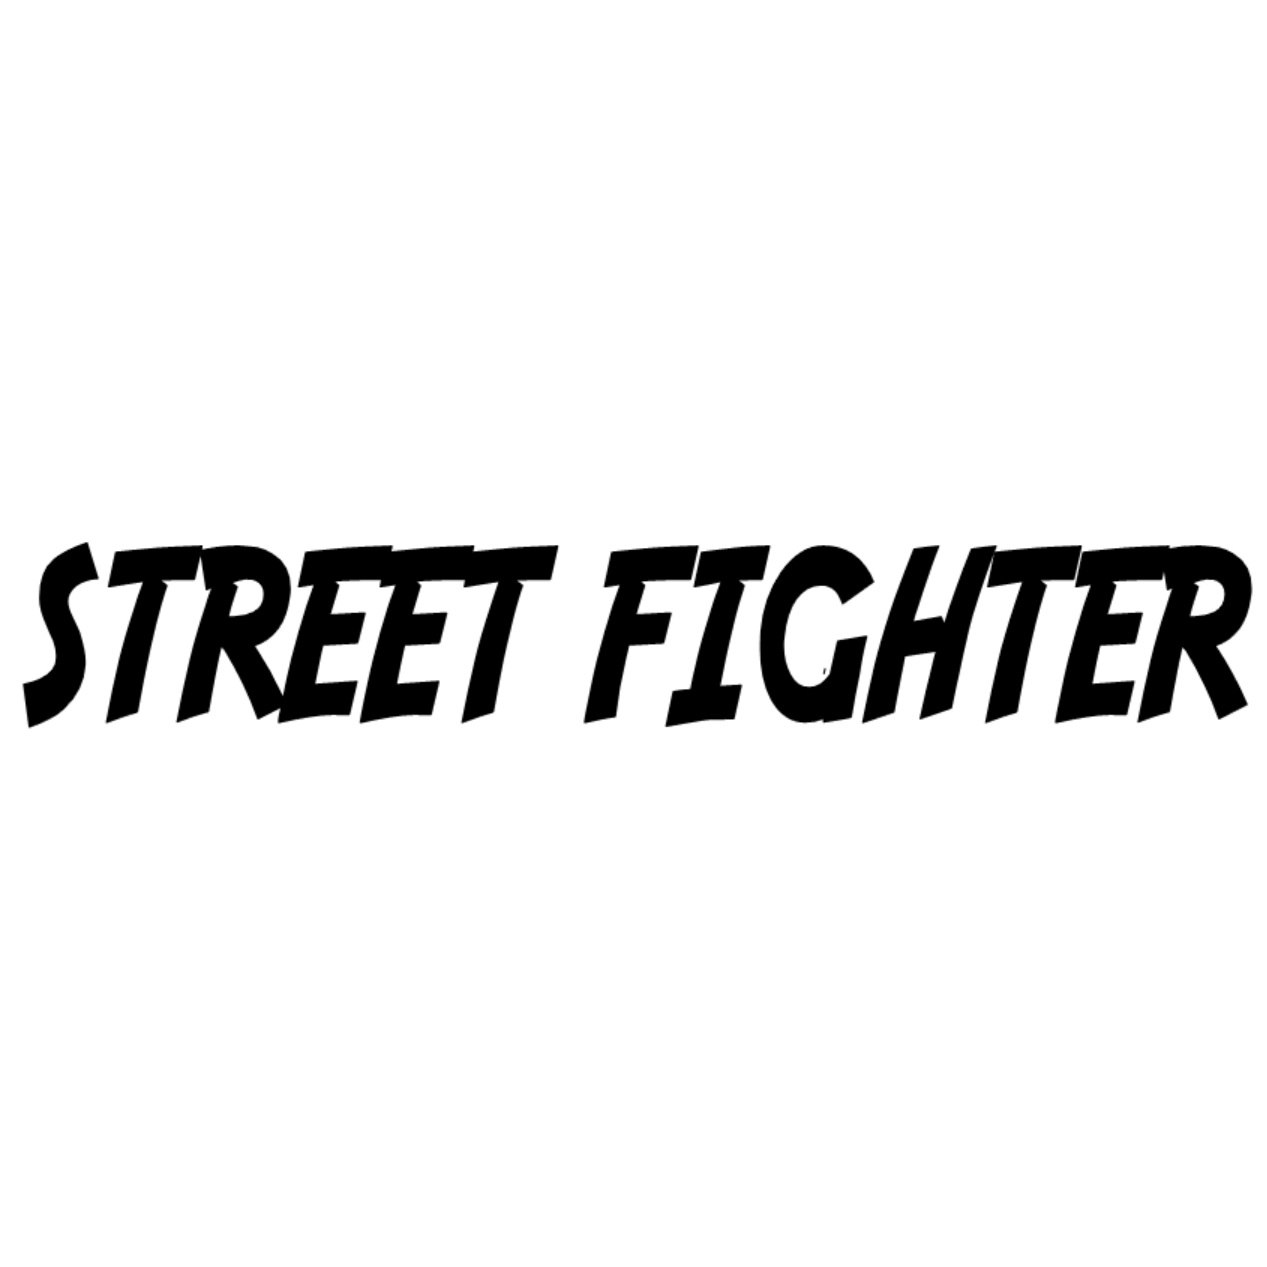 Dekal dekaler klistermärke street fighter